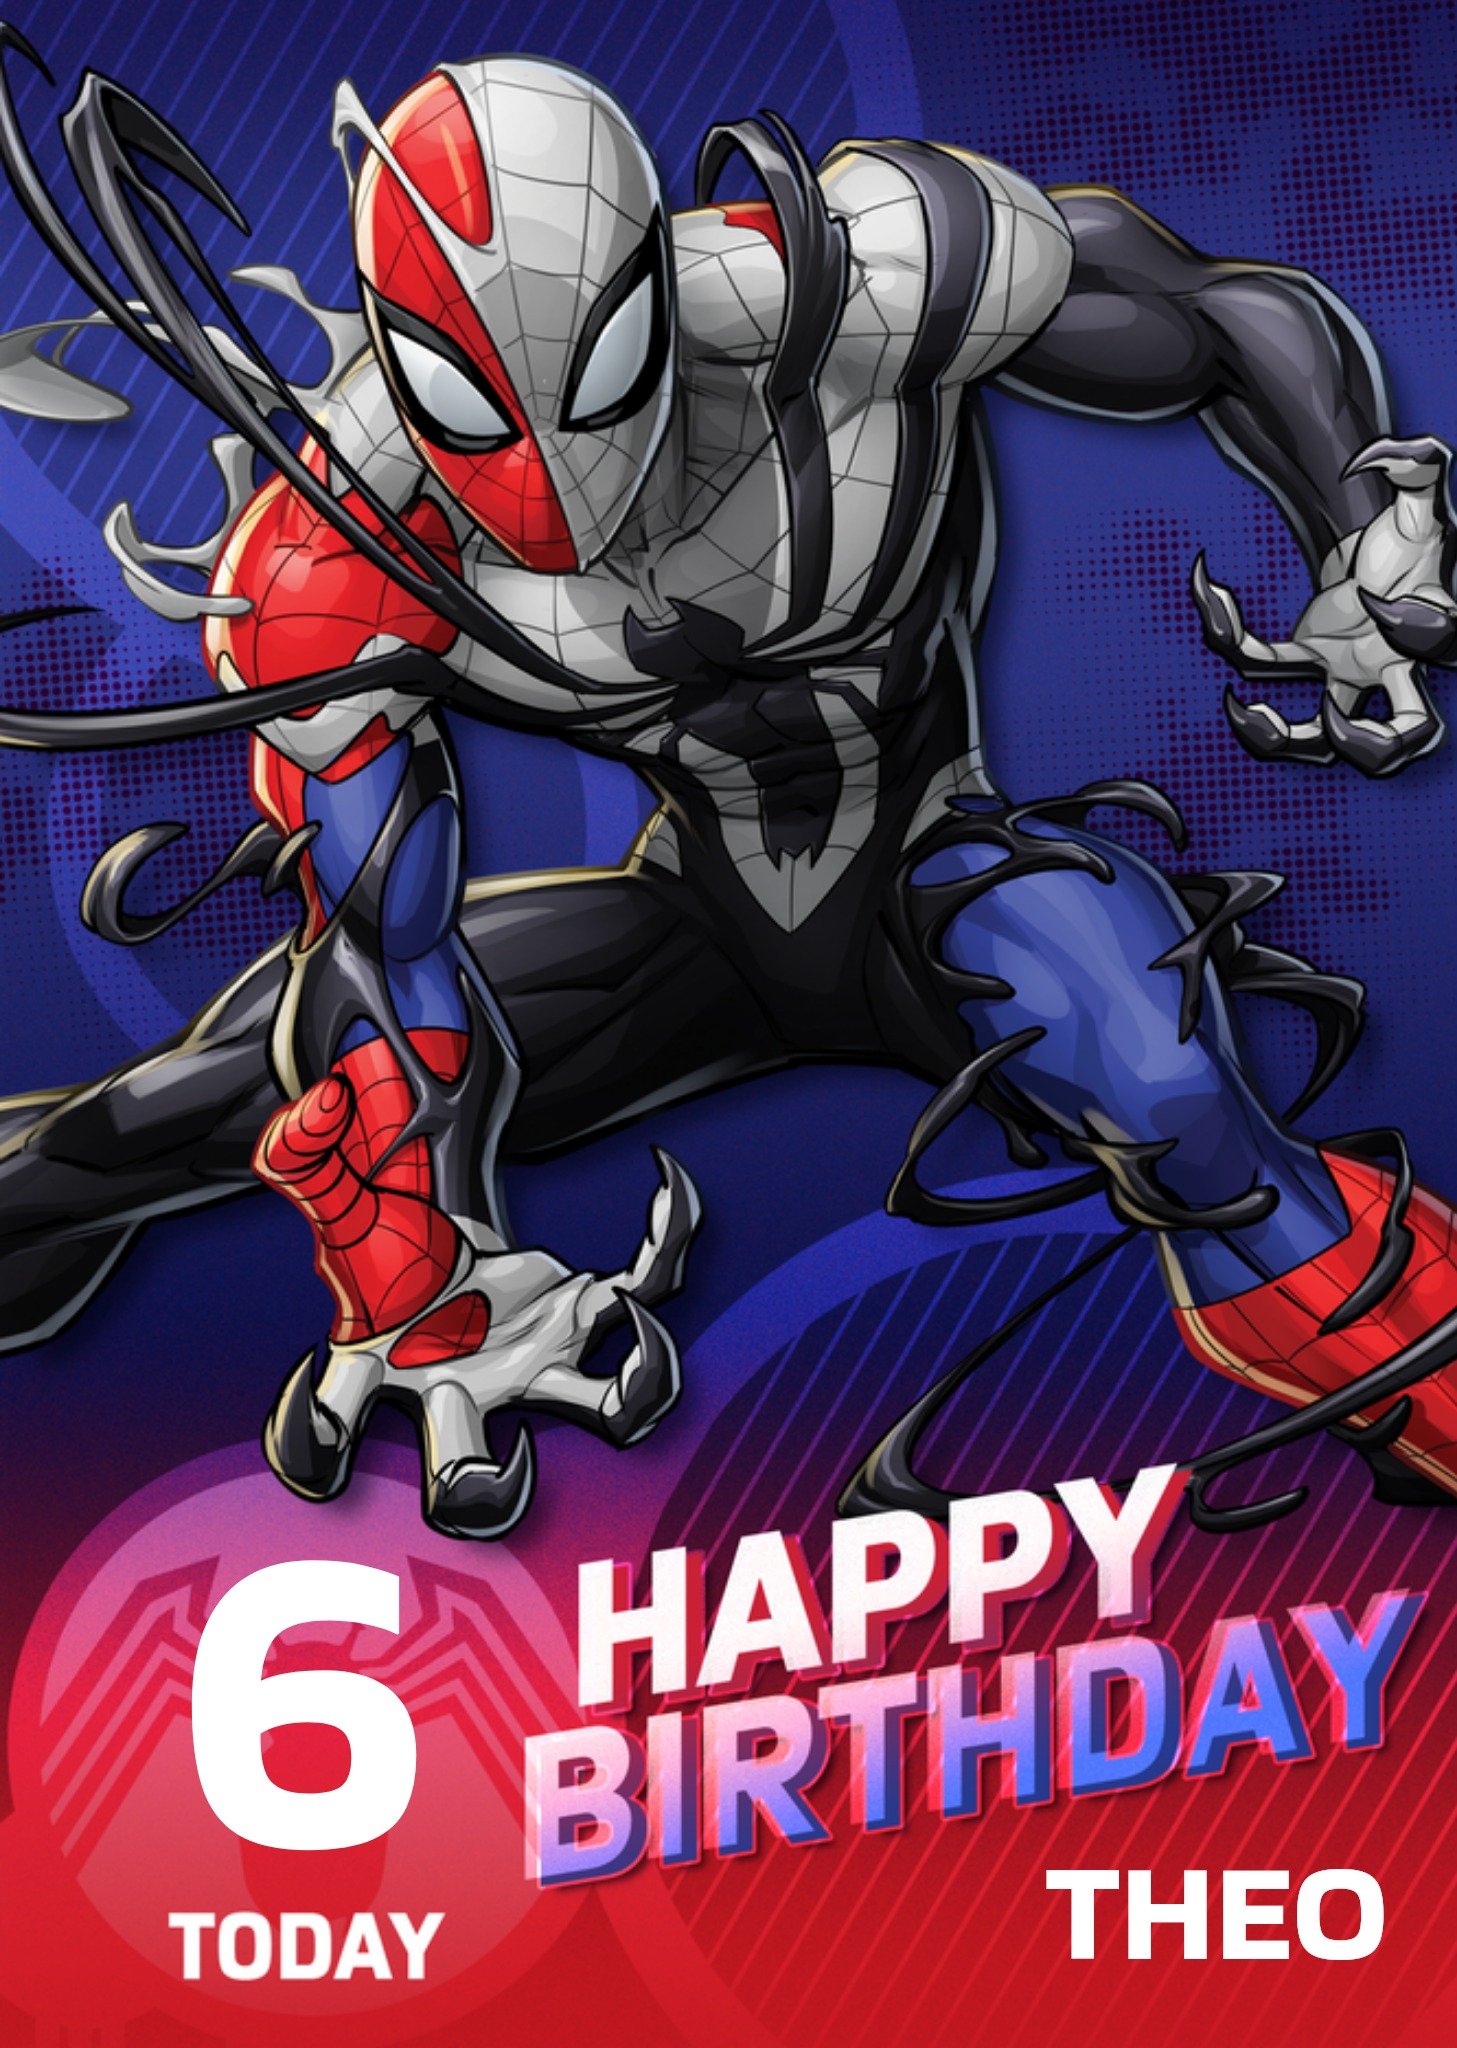 Marvel Spider-Man Maximum Venom 6 Today Happy Birthday Card Ecard